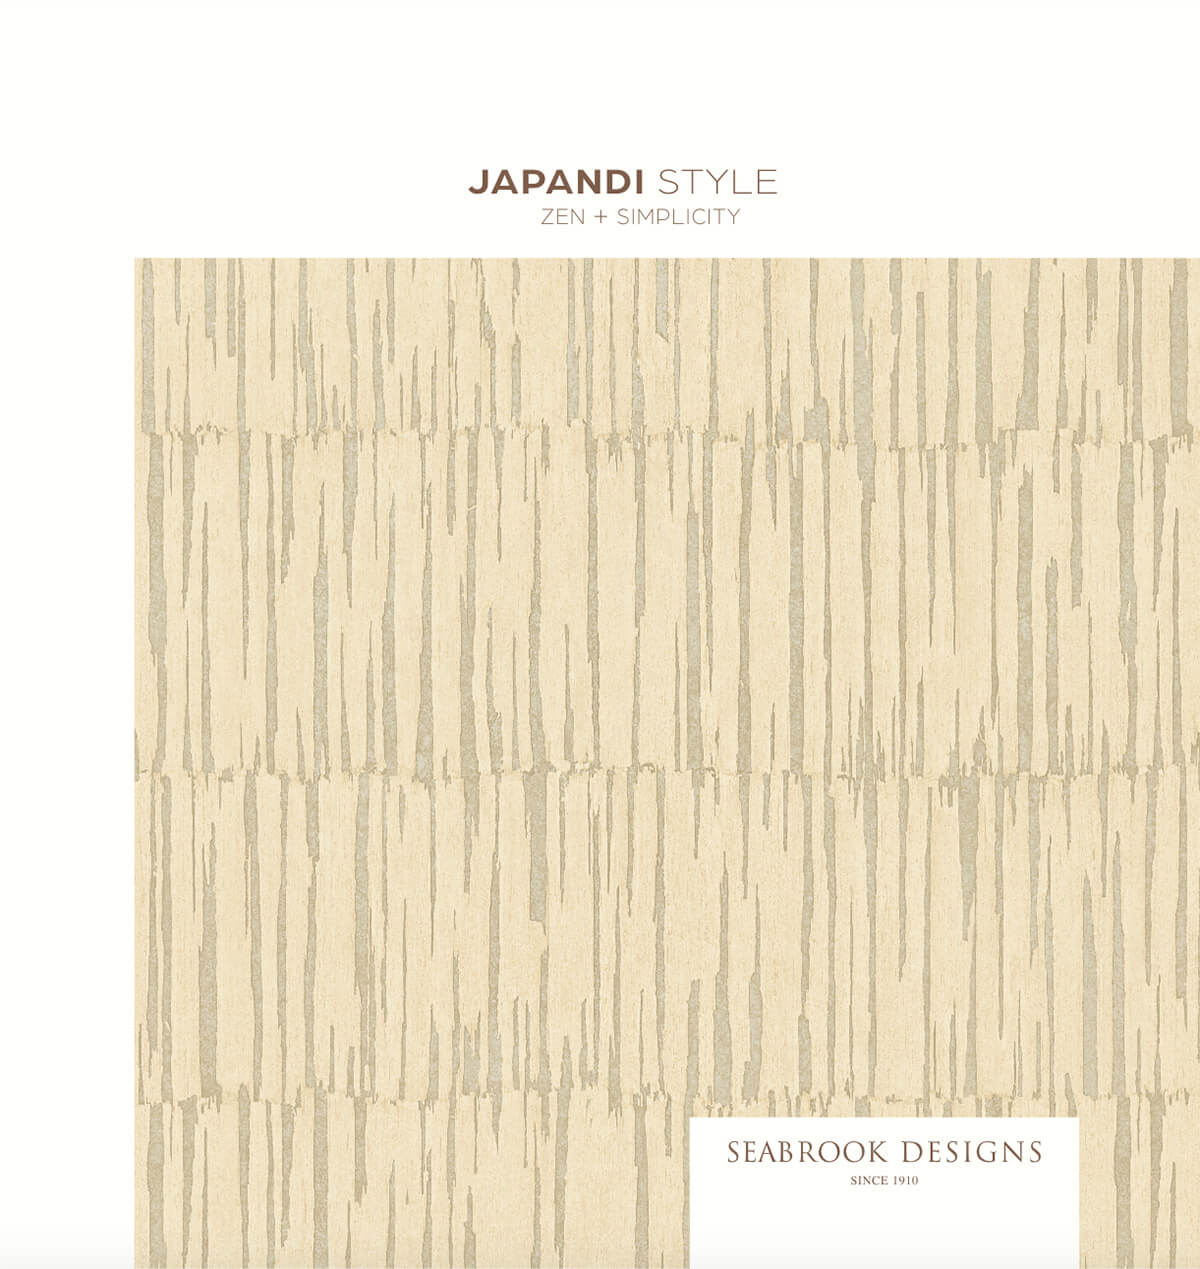 Seabrook Designs Japandi Style Honshu Bamboo Wallpaper - Warmstone